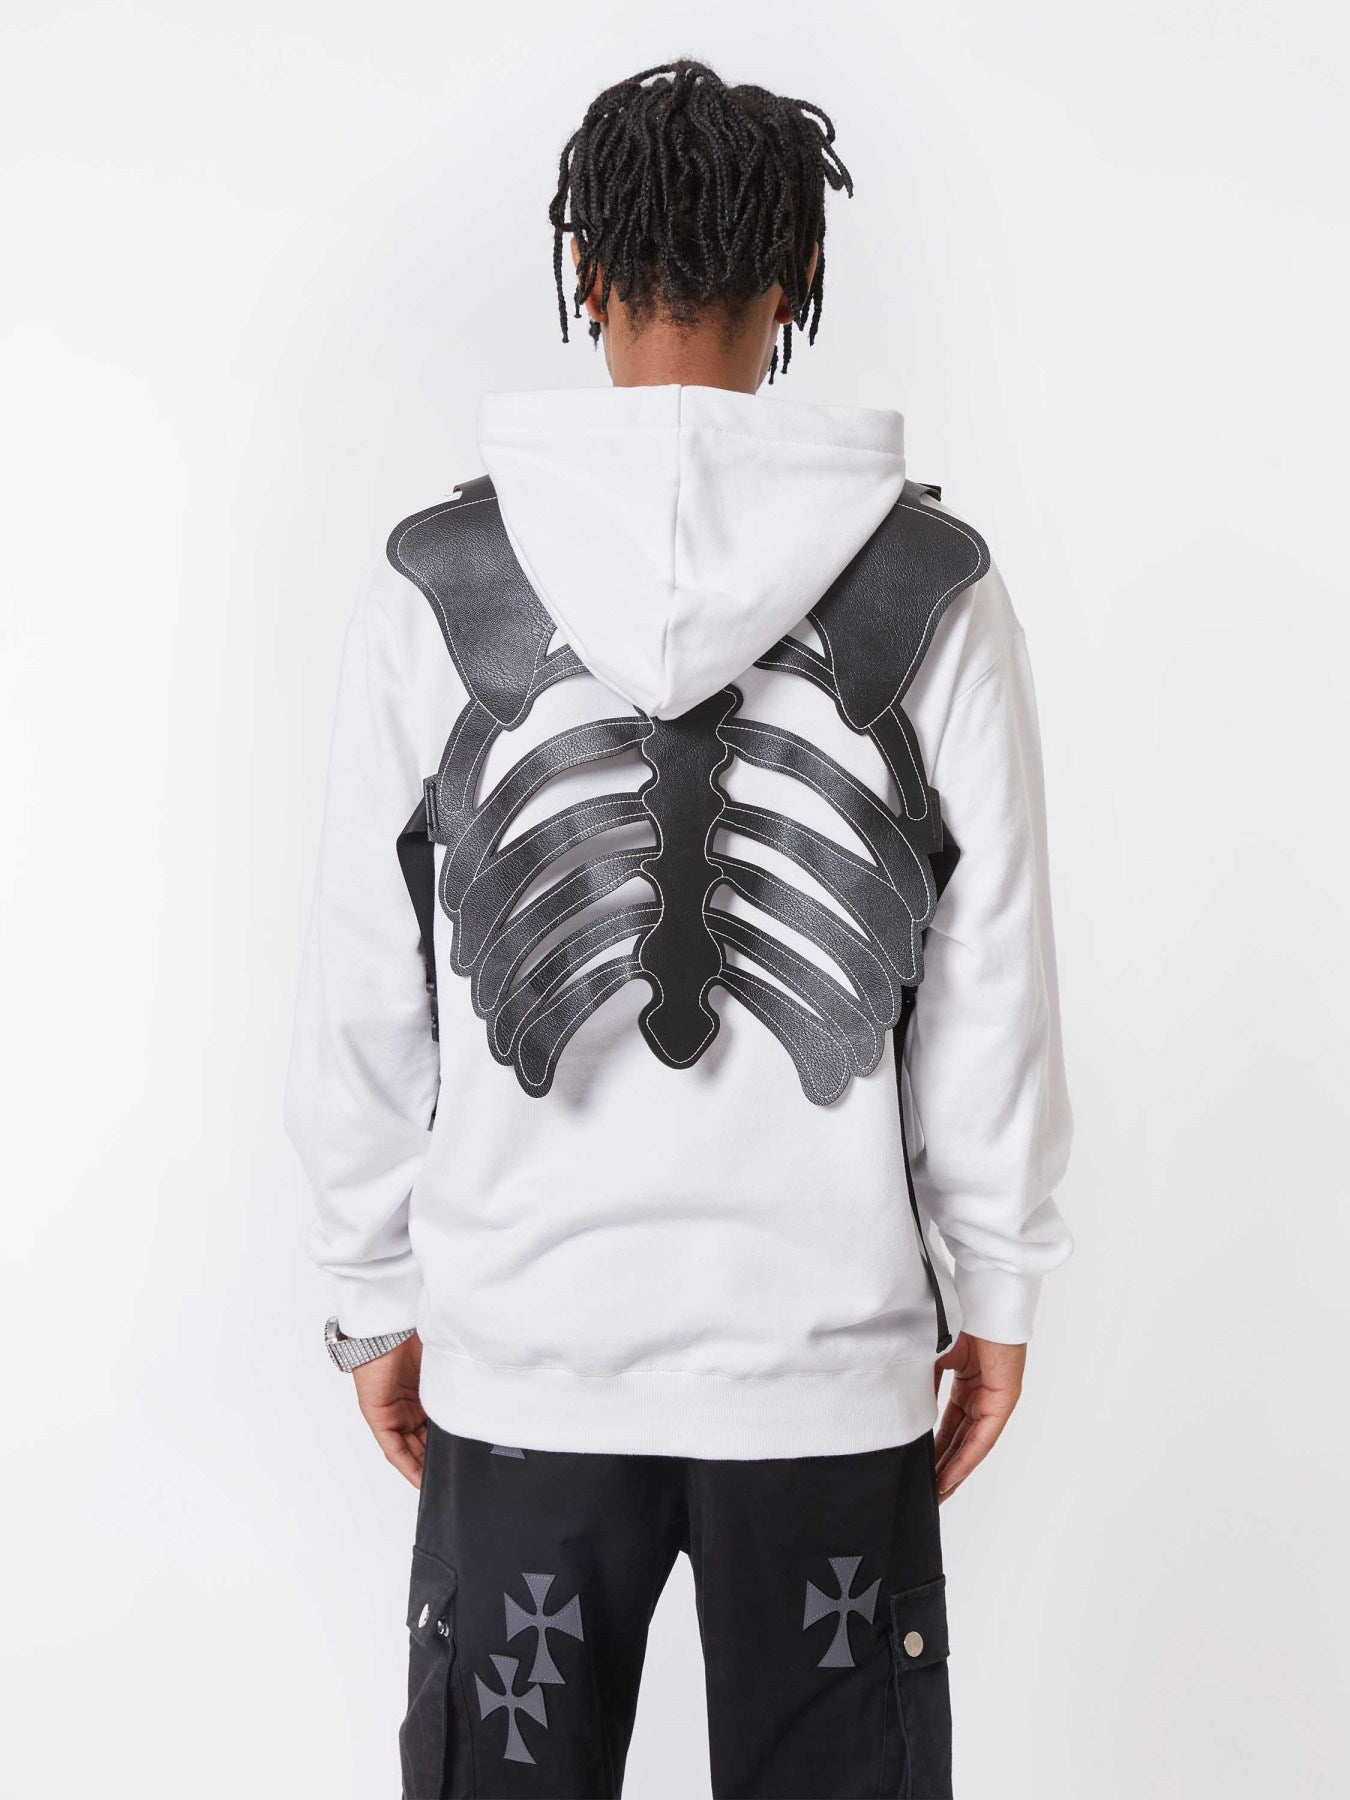 Thesupermade Creative Design Bone Skin Vest